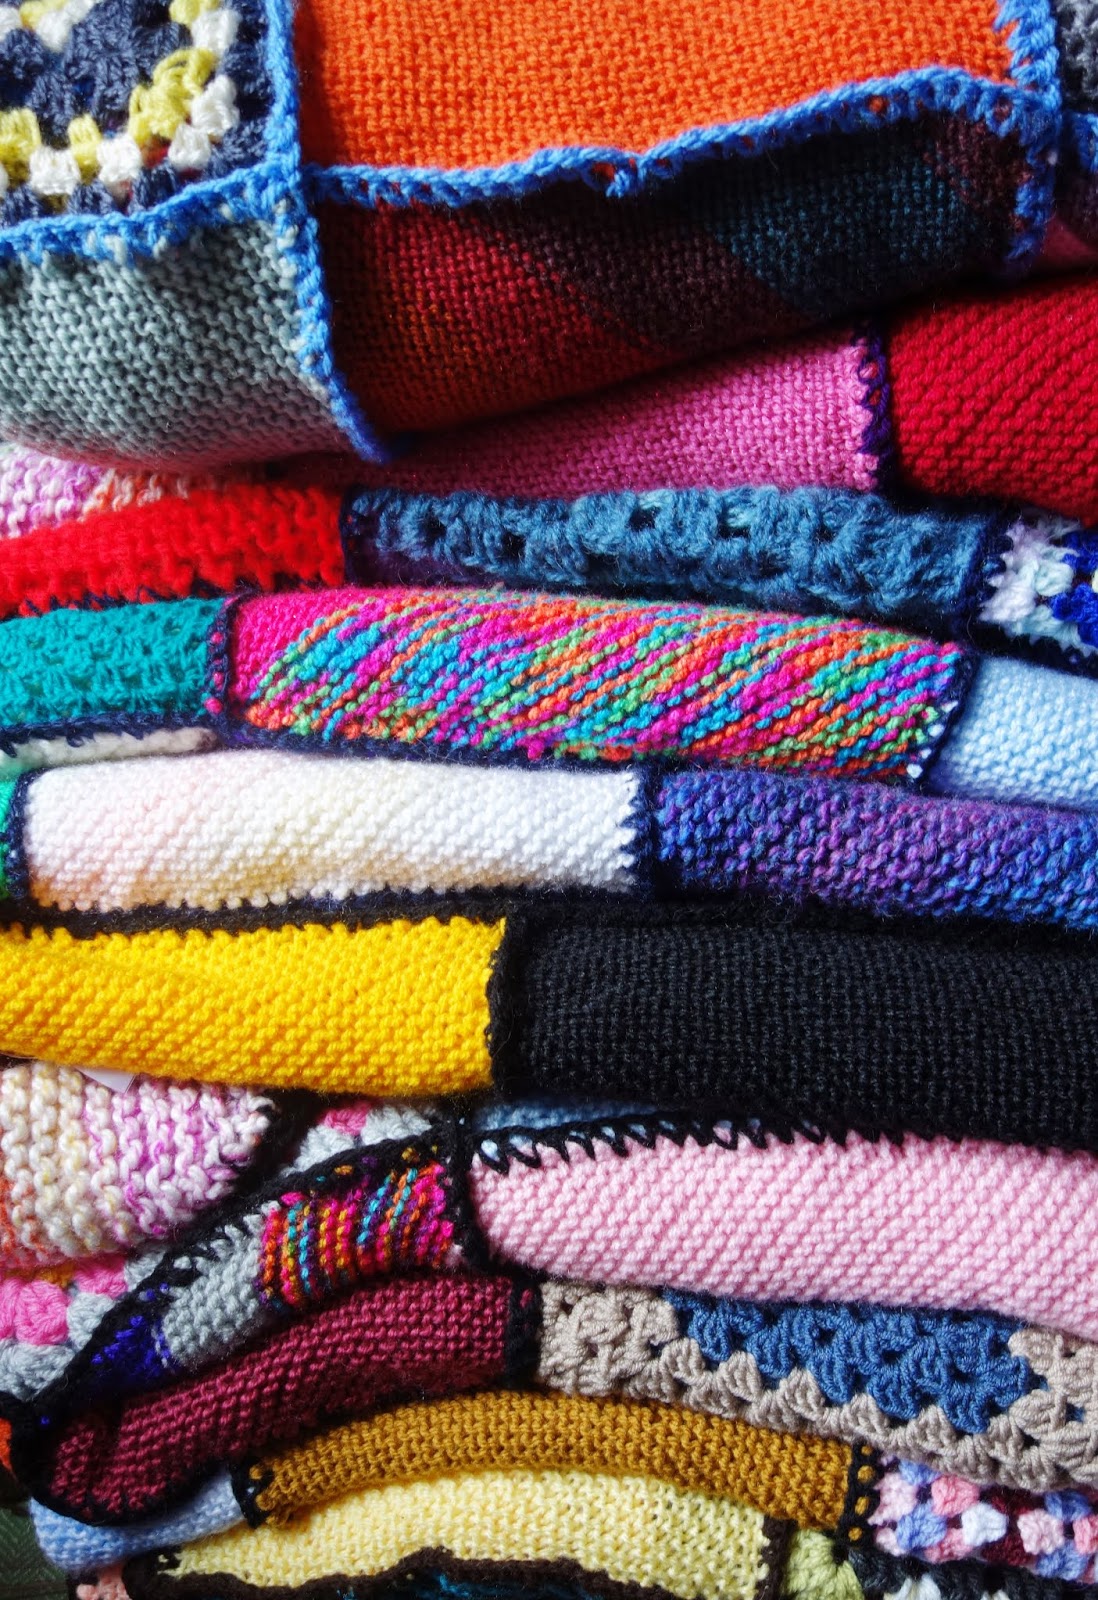 Frankie's Knitted Stuff: Blankets, blankets, blankets ...